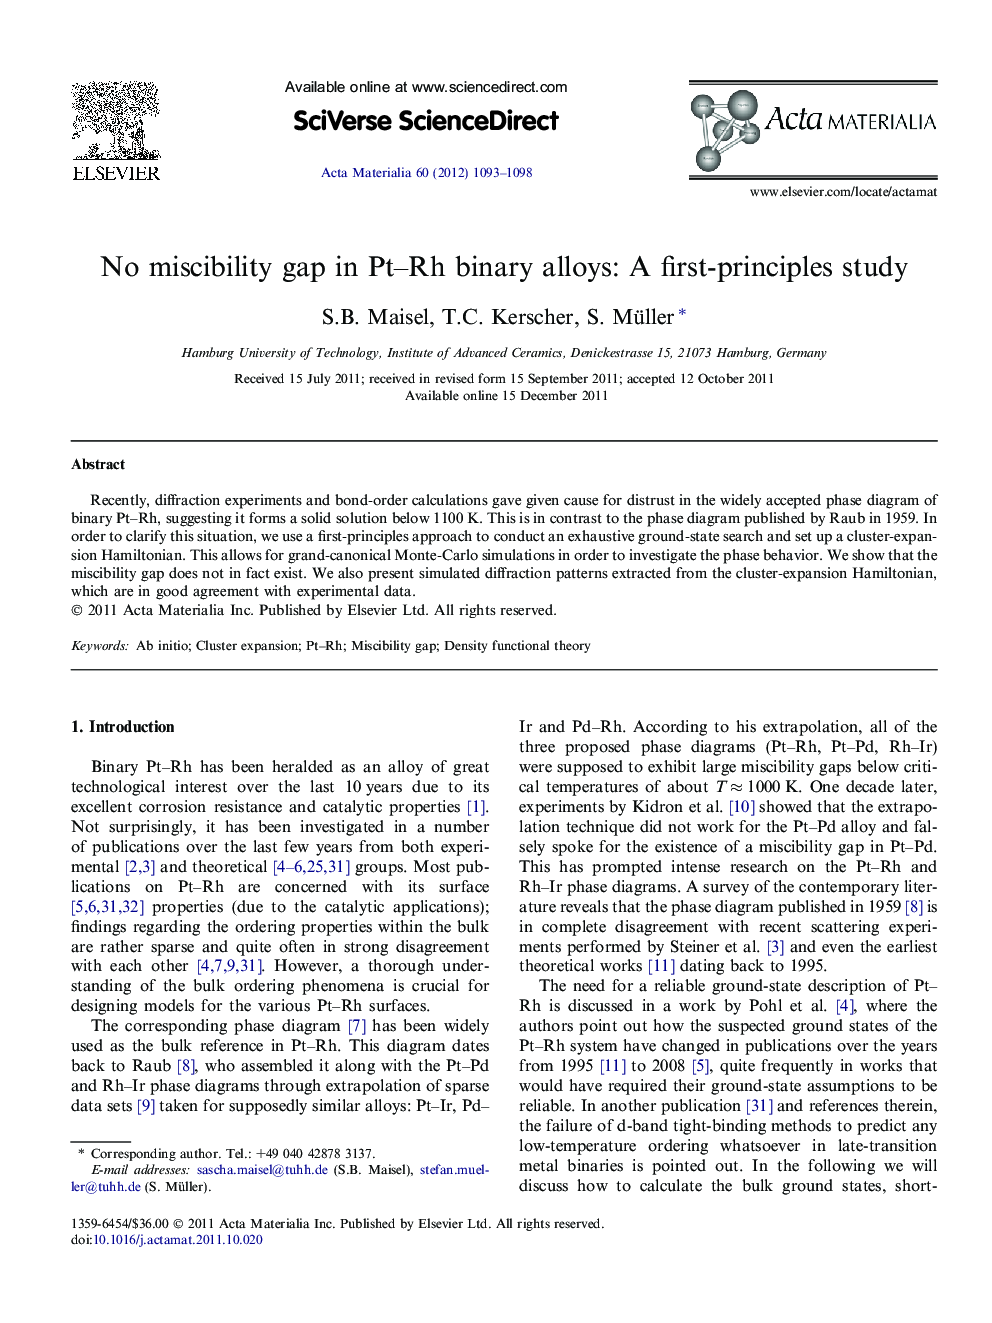 No miscibility gap in Pt-Rh binary alloys: A first-principles study